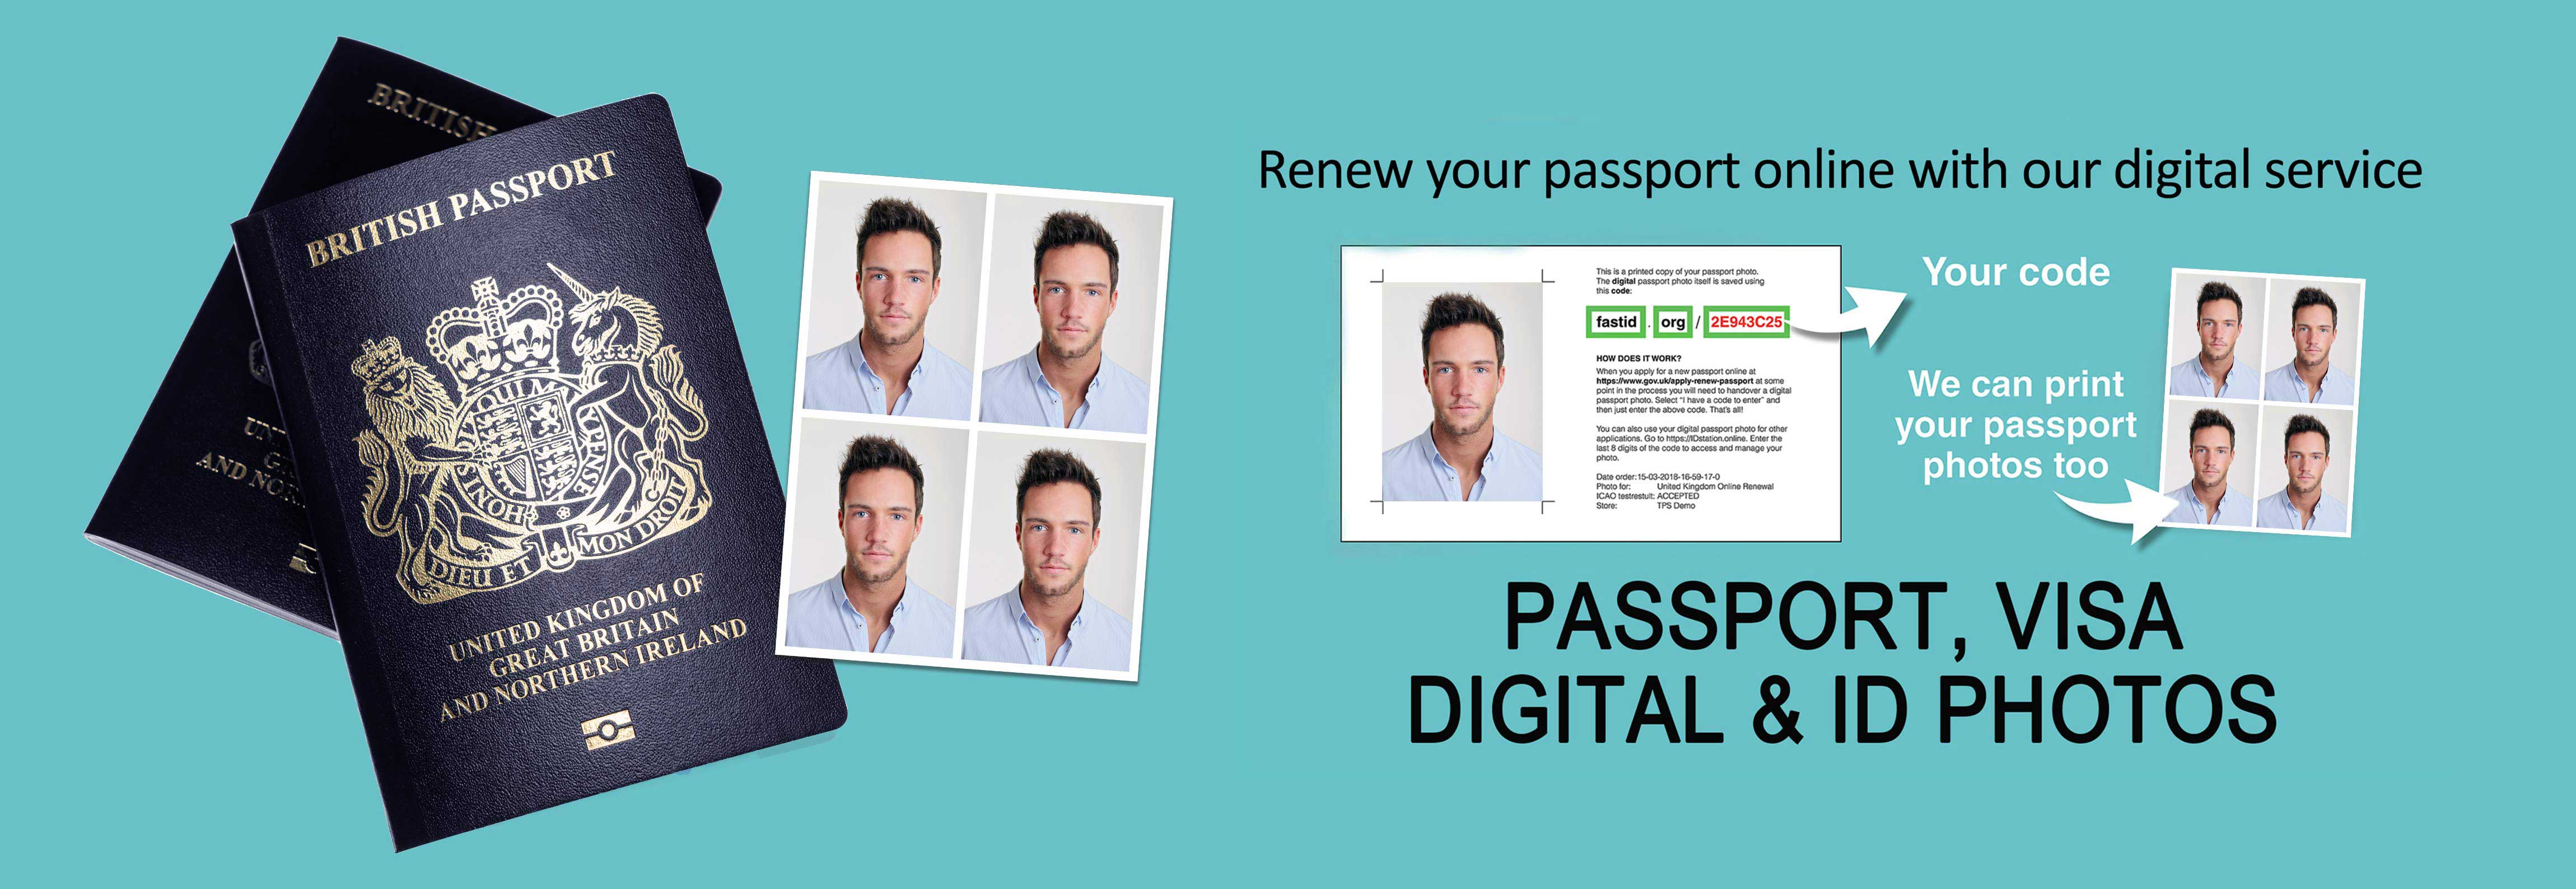 Digital passport photos in Bedford